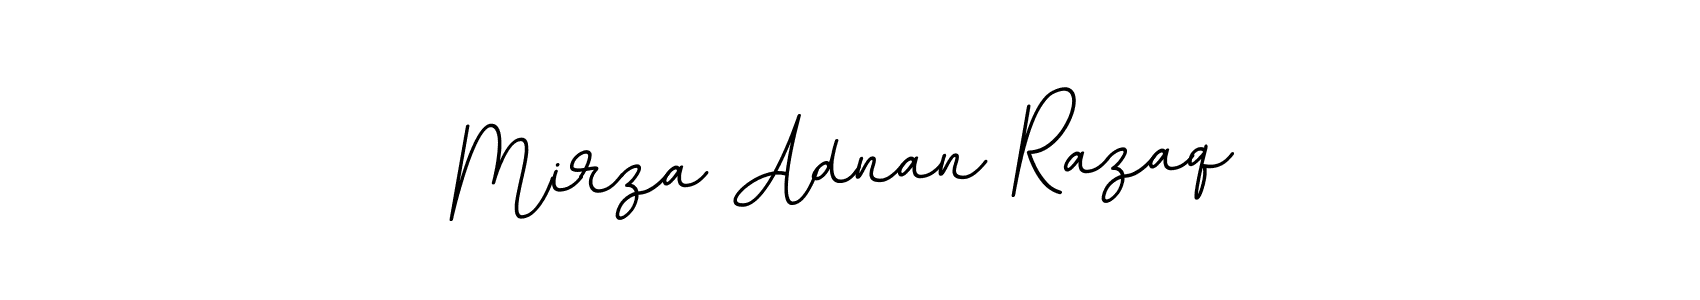 How to Draw Mirza Adnan Razaq signature style? BallpointsItalic-DORy9 is a latest design signature styles for name Mirza Adnan Razaq. Mirza Adnan Razaq signature style 11 images and pictures png